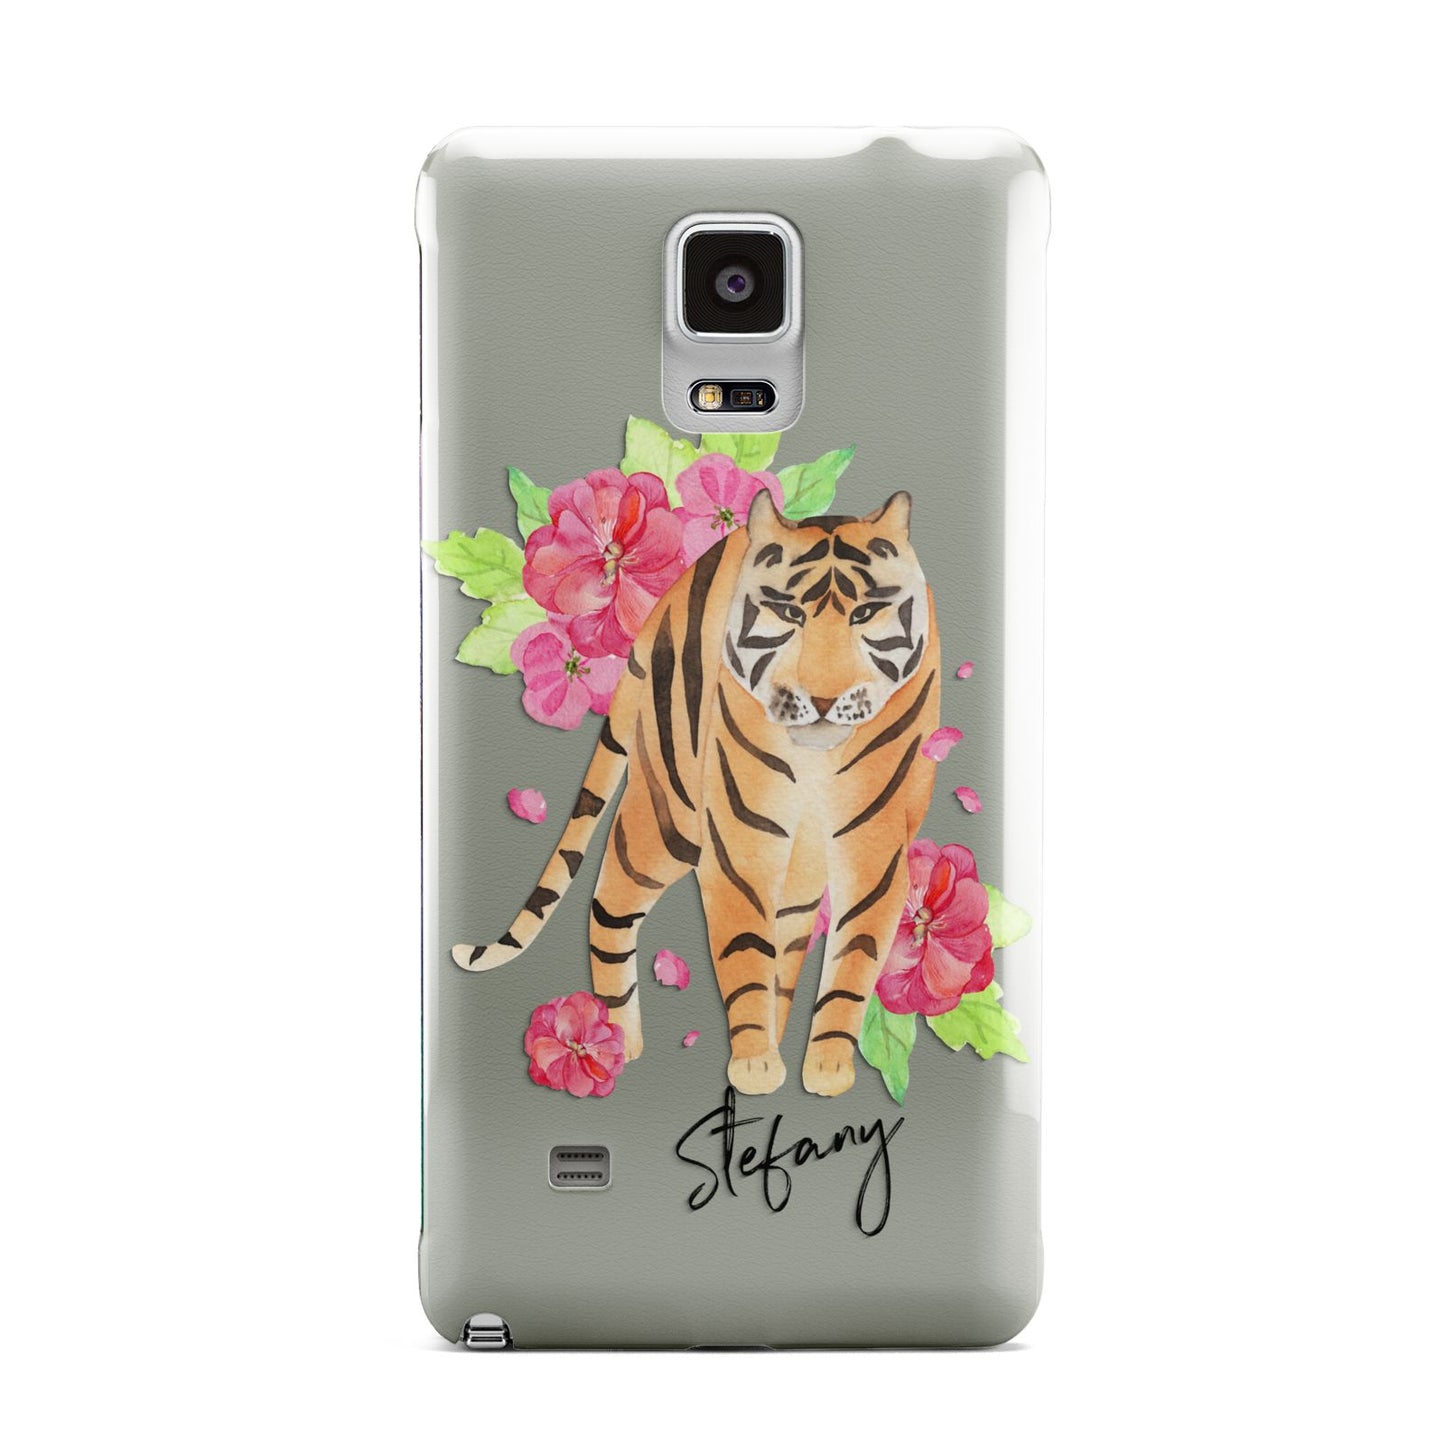 Personalised Tiger Samsung Galaxy Note 4 Case